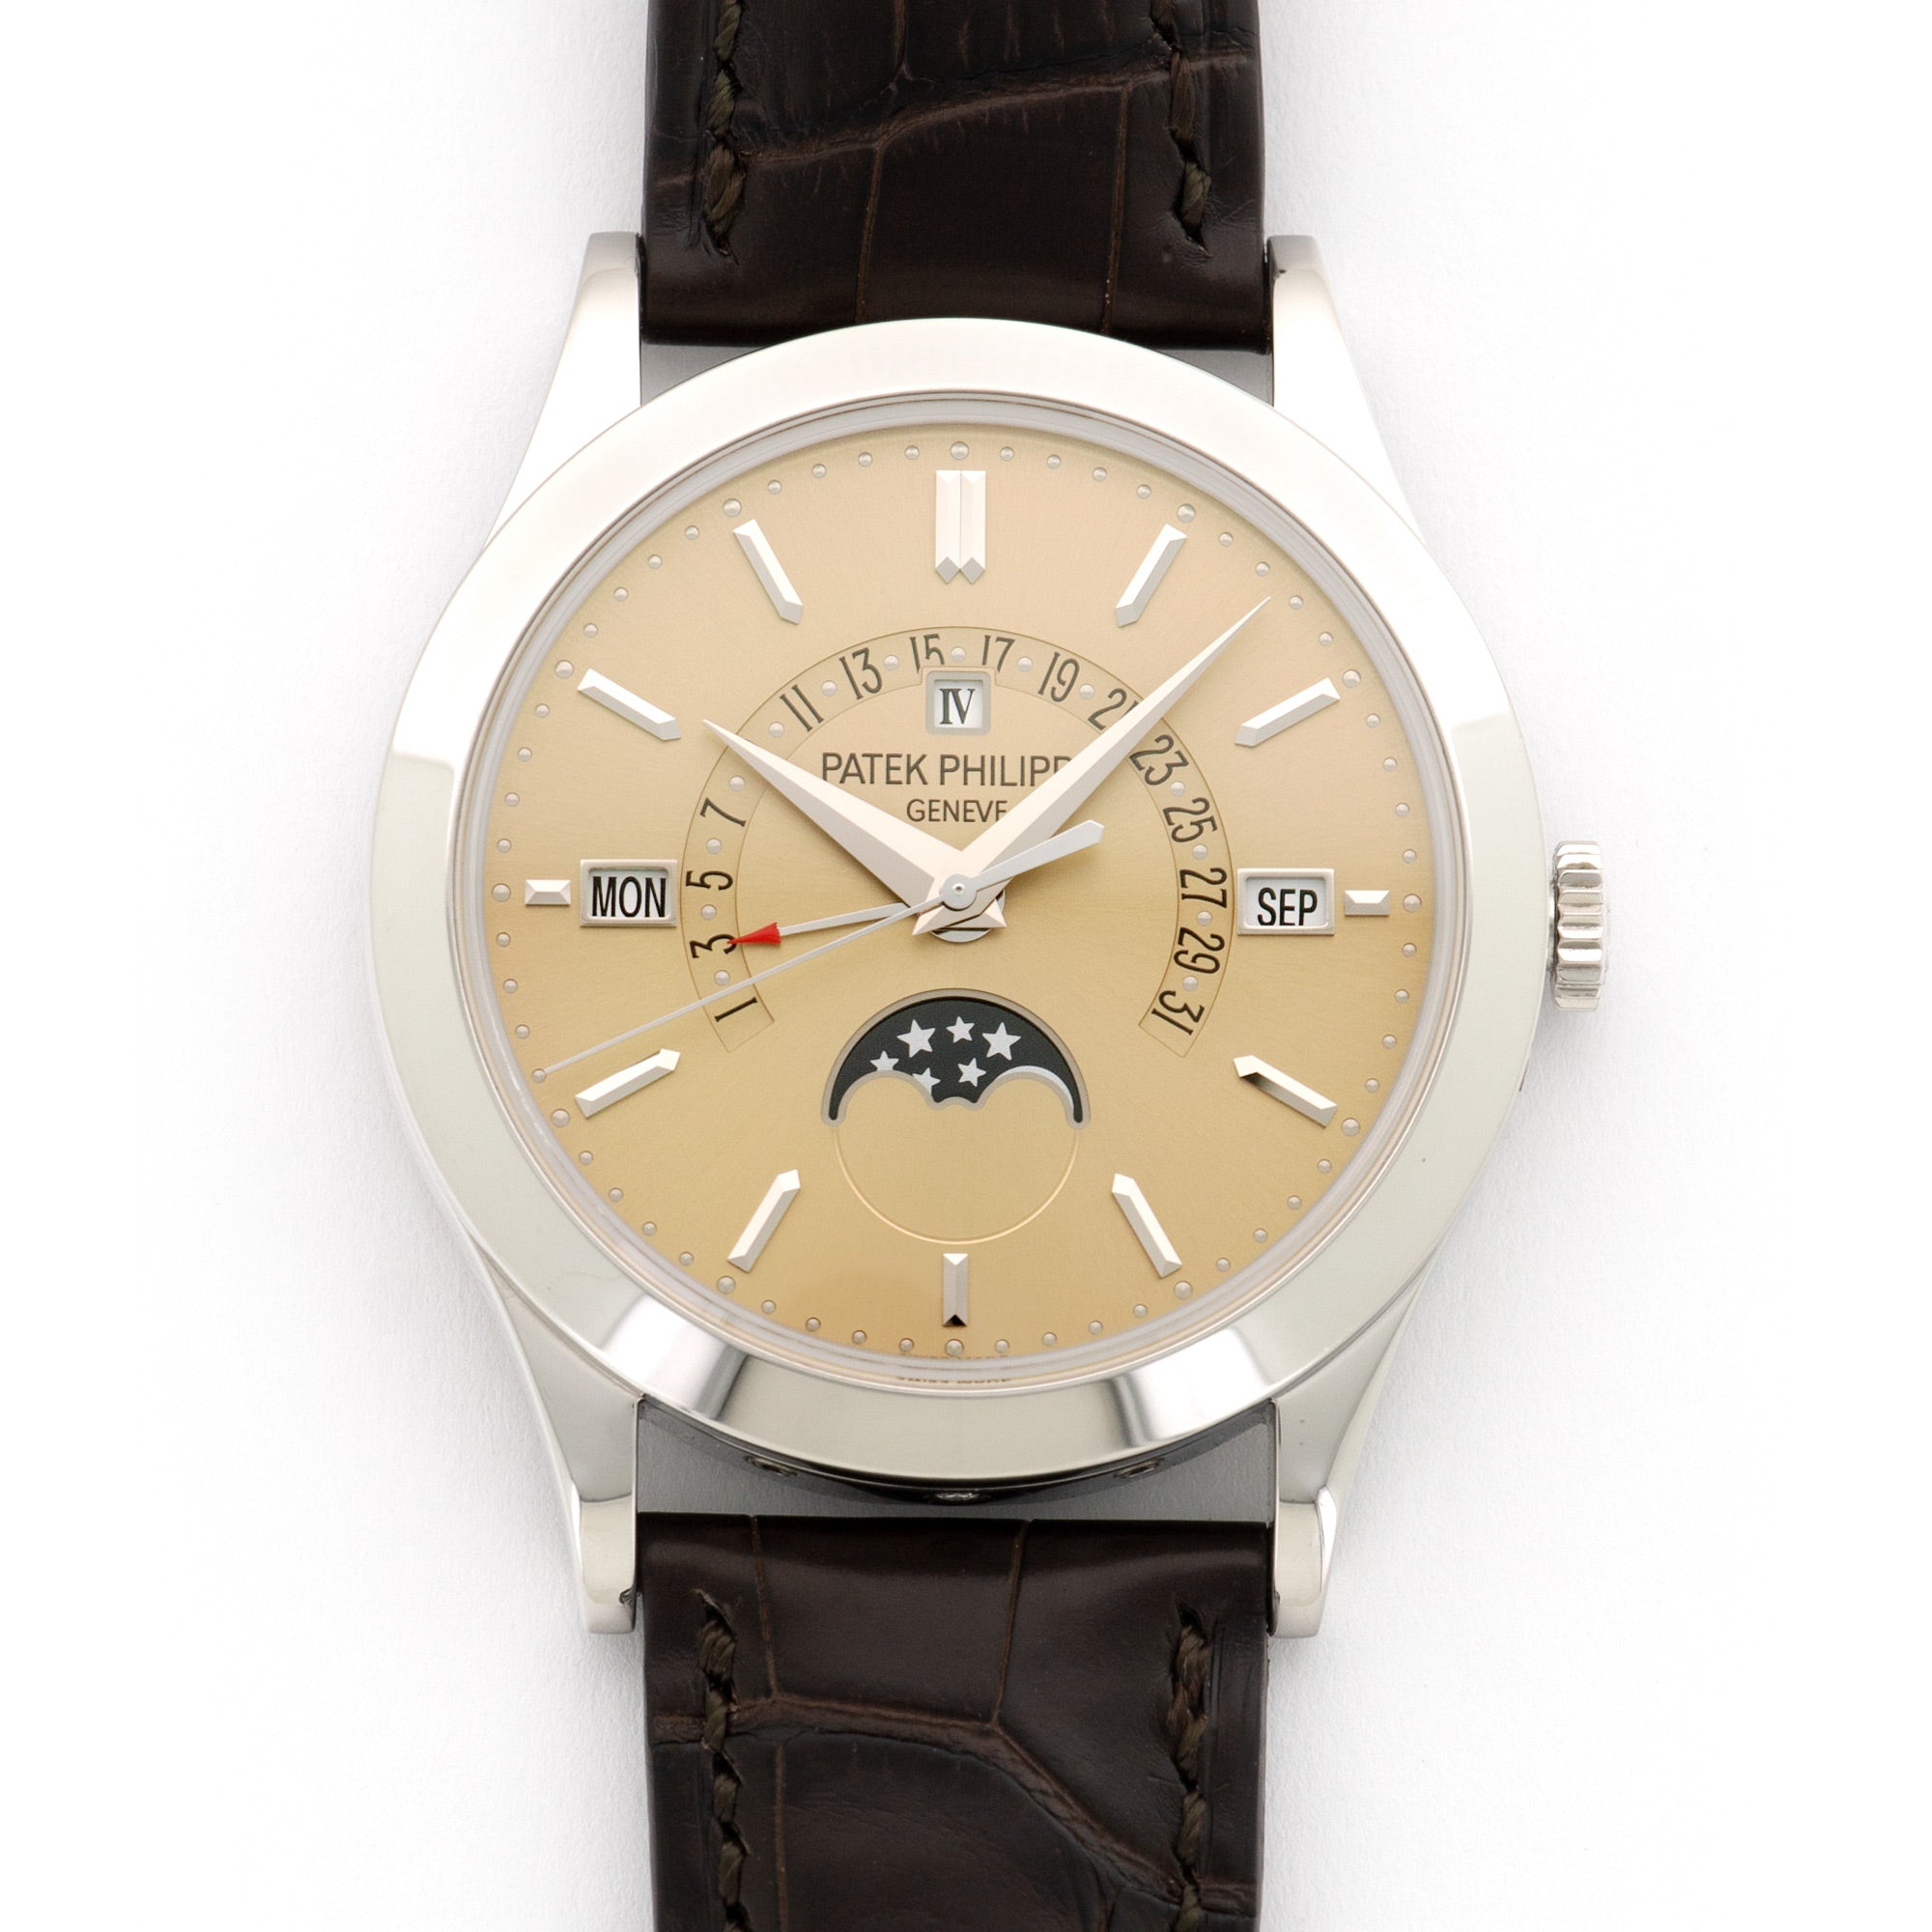 Patek Philippe - Patek Philippe Platinum Perpetual Calendar Retrograde Watch Ref. 5496 - The Keystone Watches